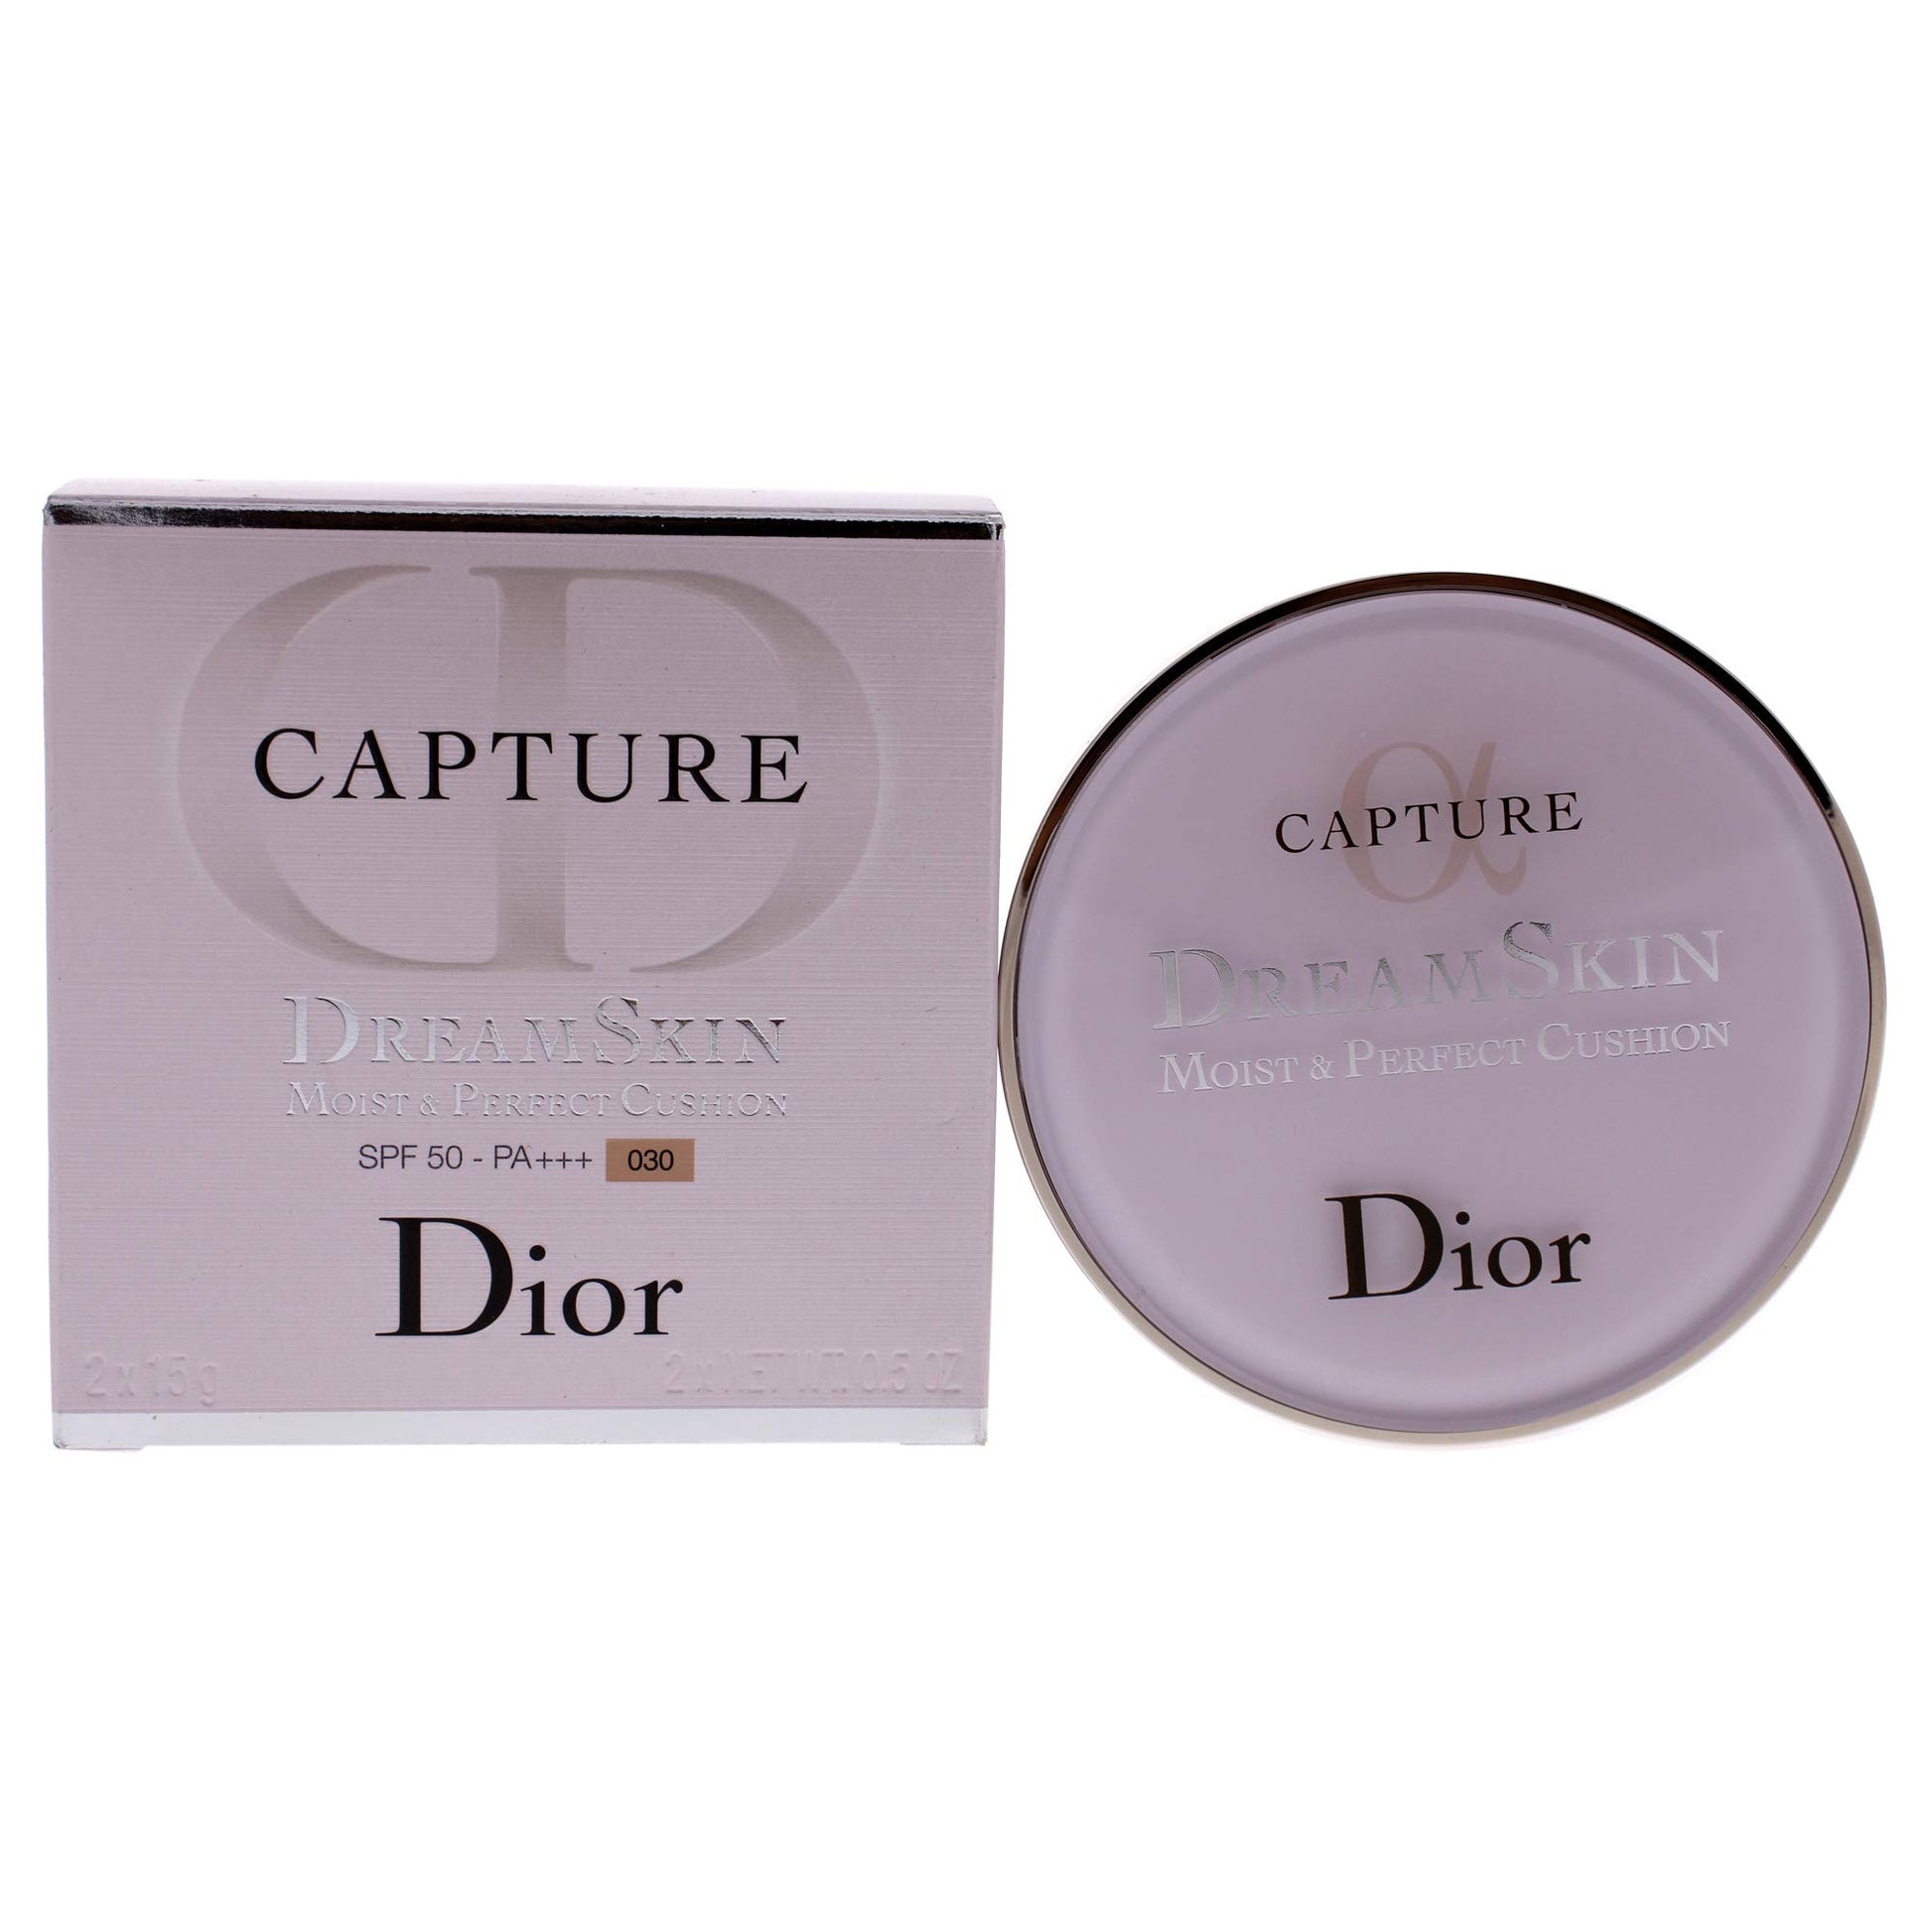 Buy Dior Capture Dream Skin Moist & Perfect Cushion - 030 in Pakistan